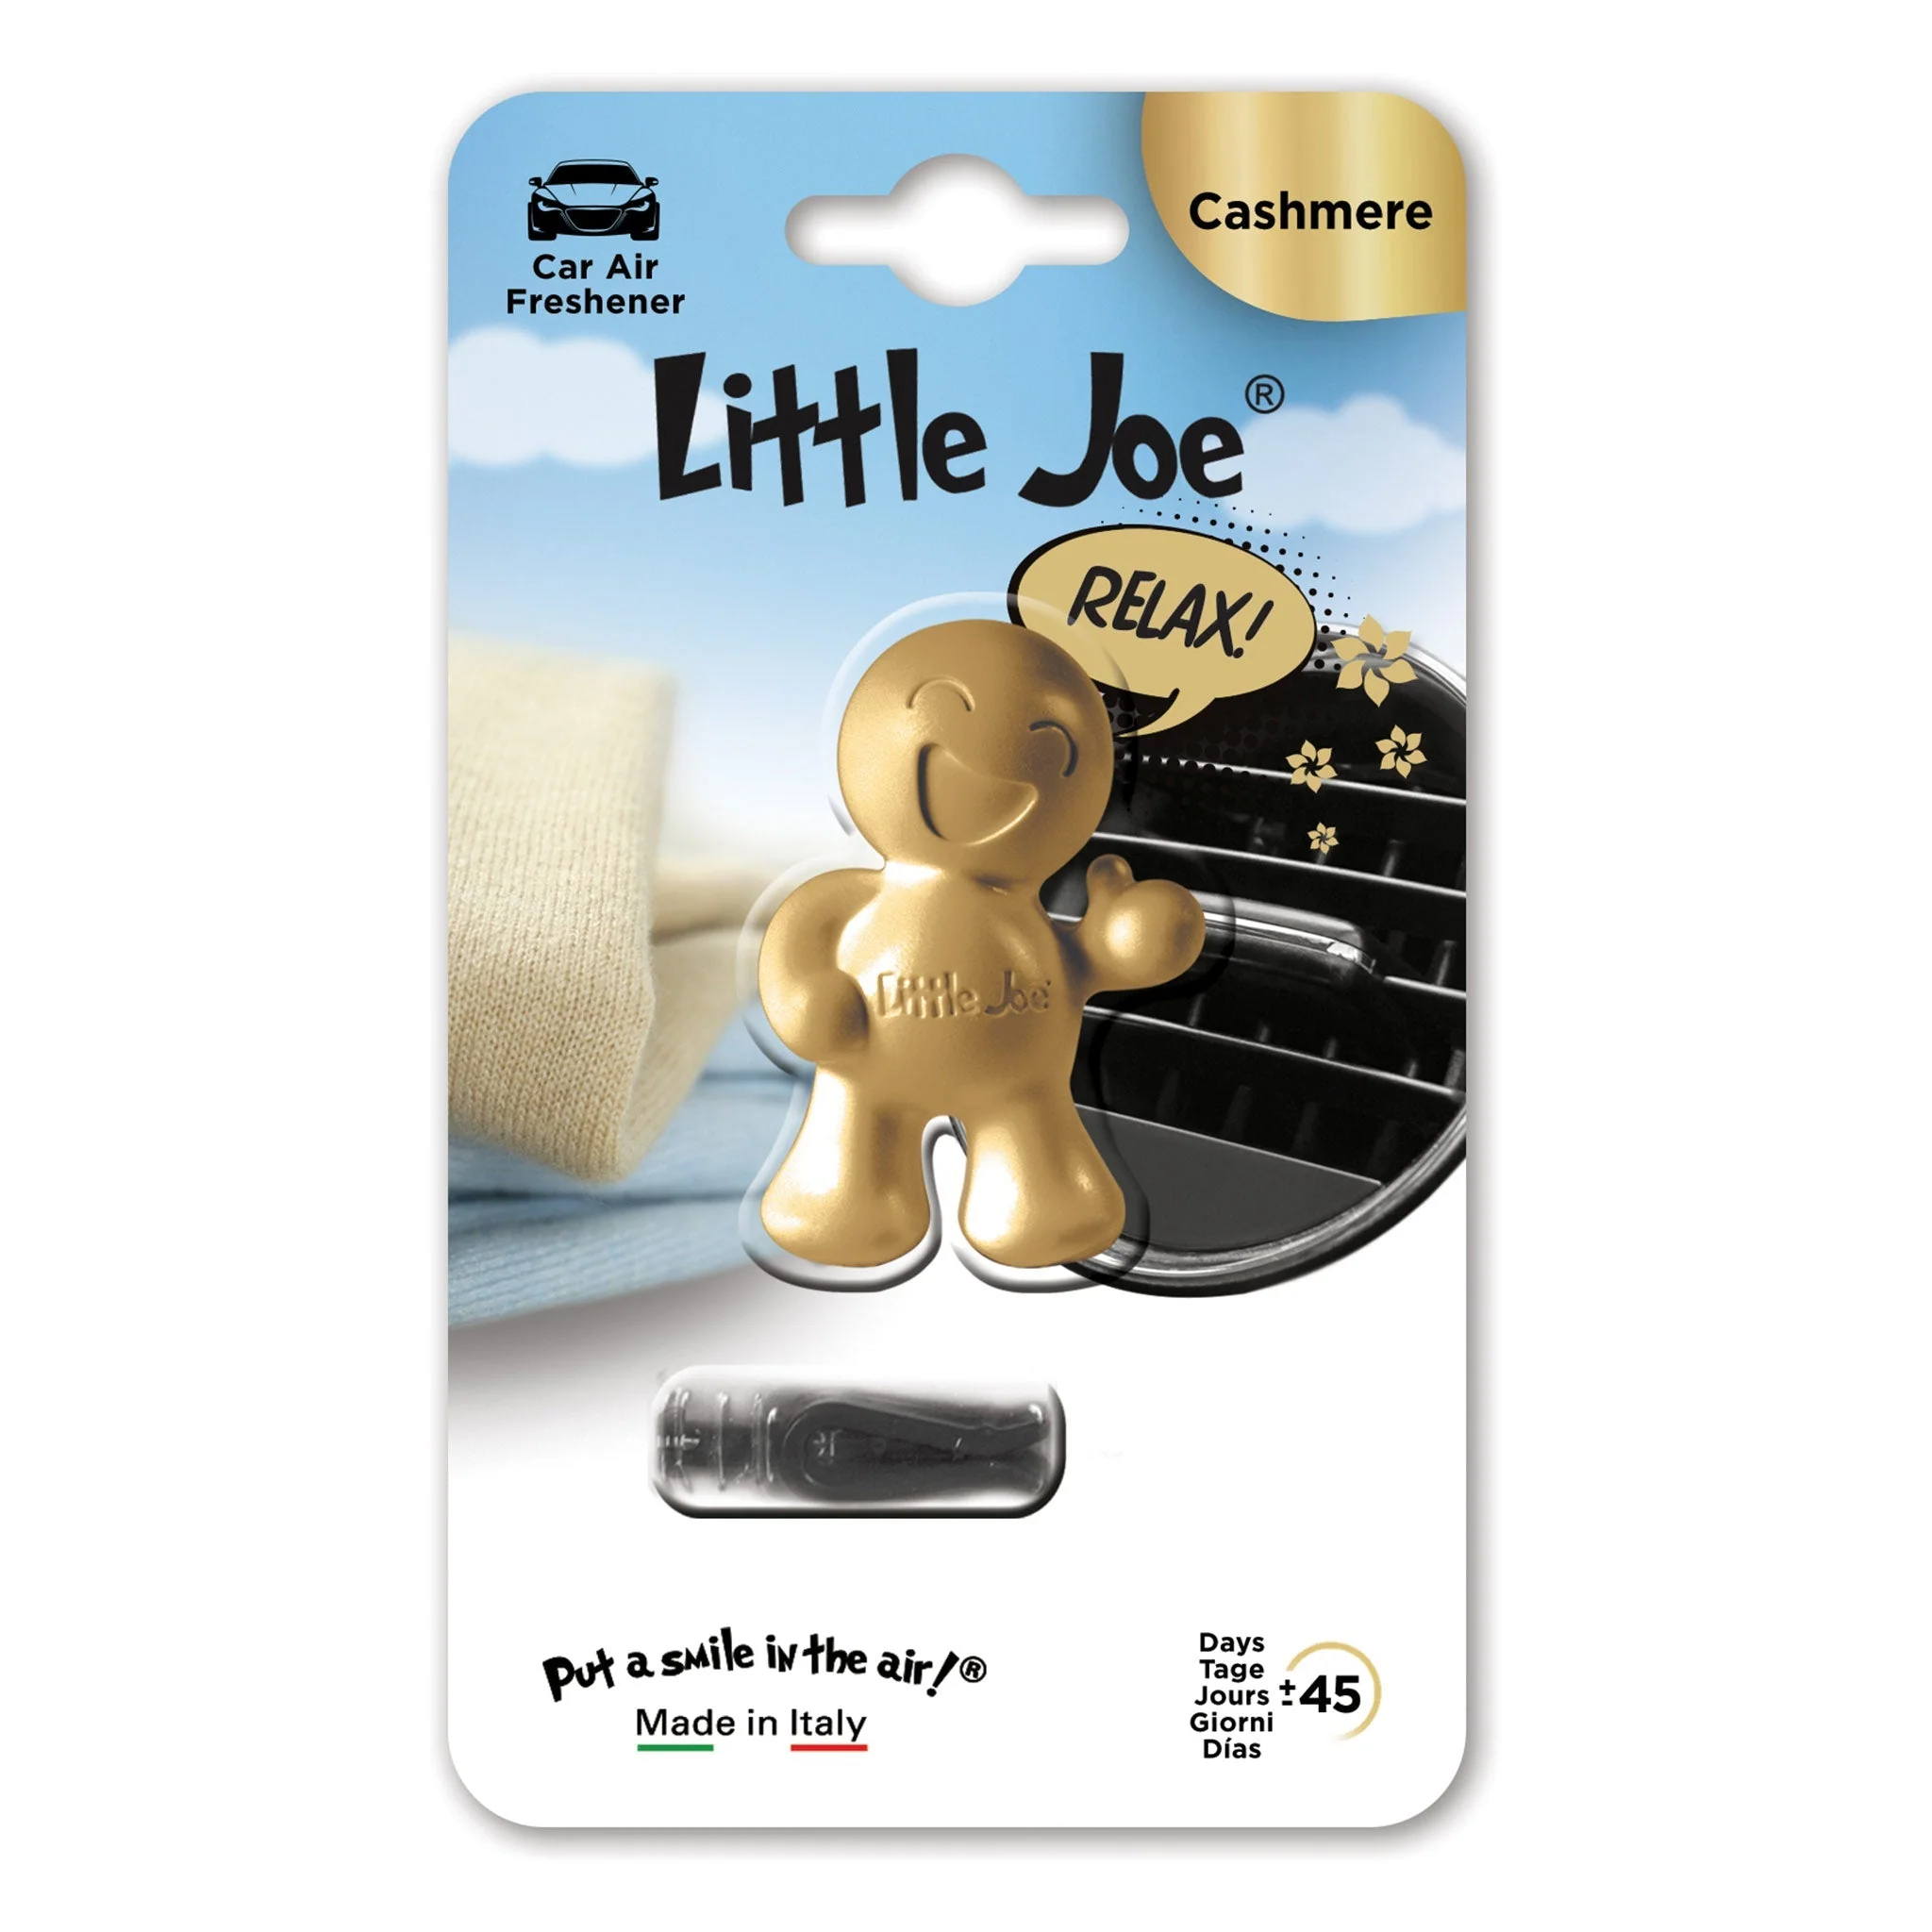 little-joe-cashmere_bil